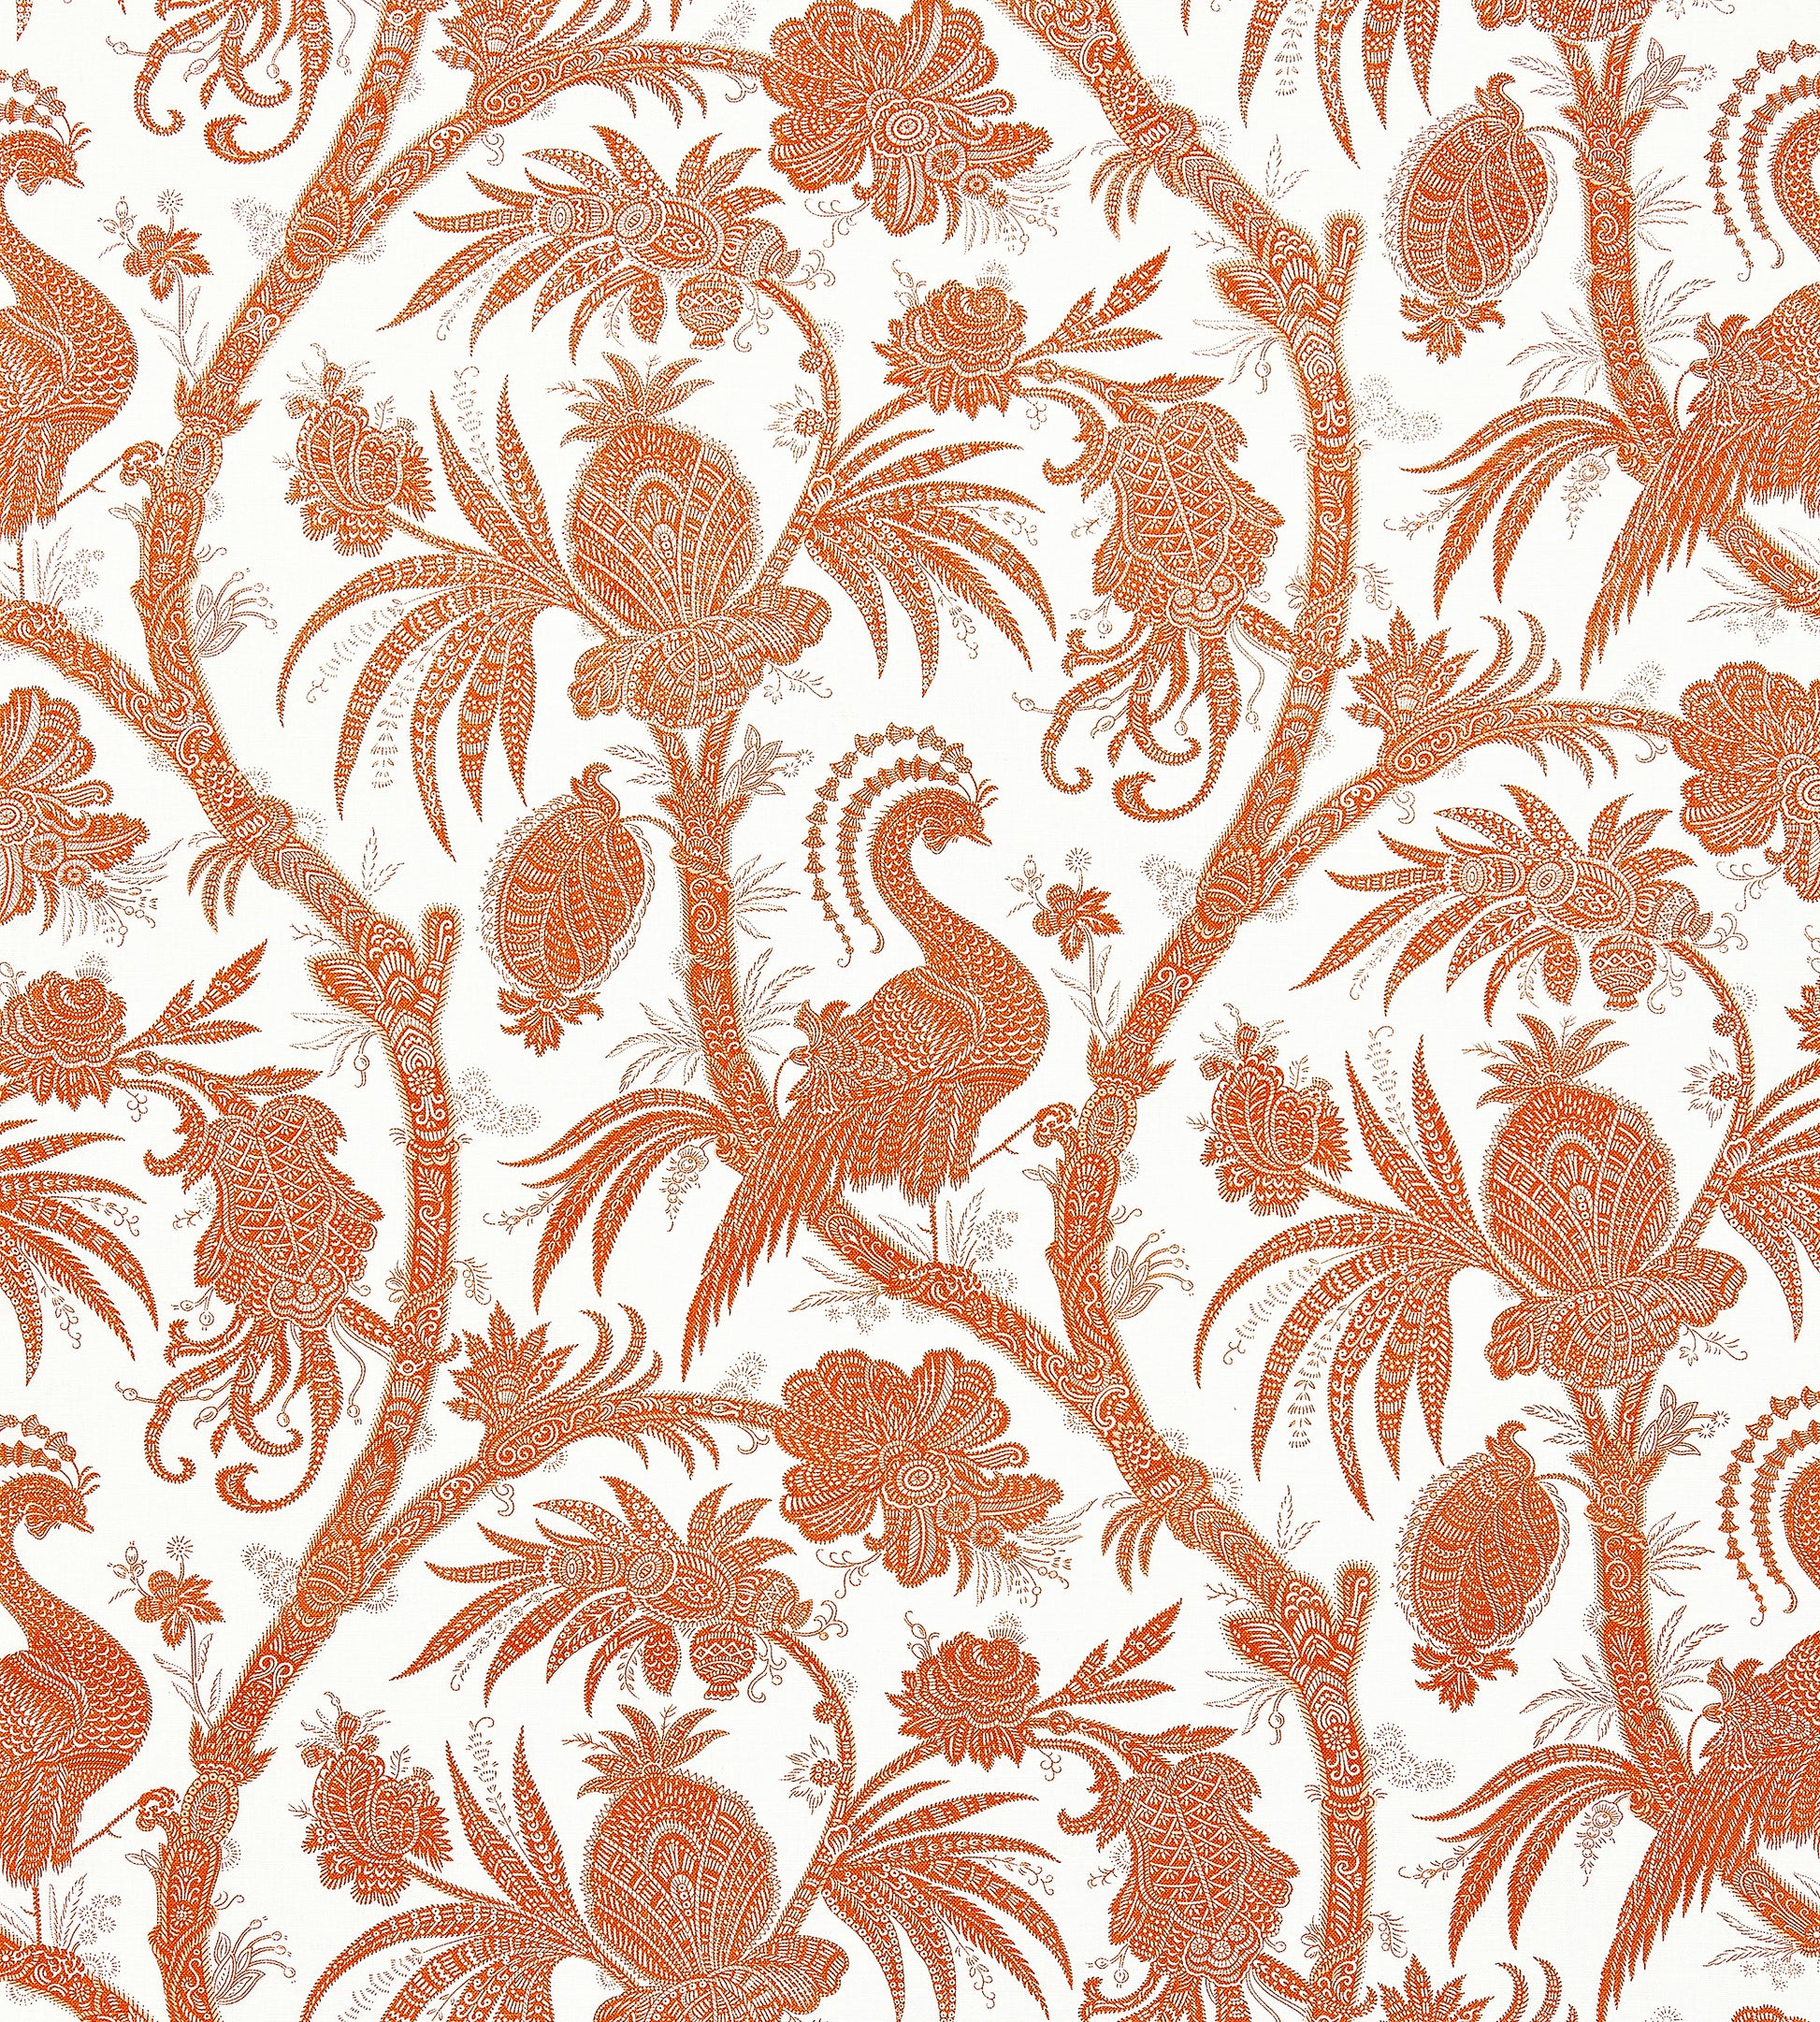 Purchase Scalamandre Fabric Pattern number SC 000416575, Balinese Peacock Linen Print Mandarin 1